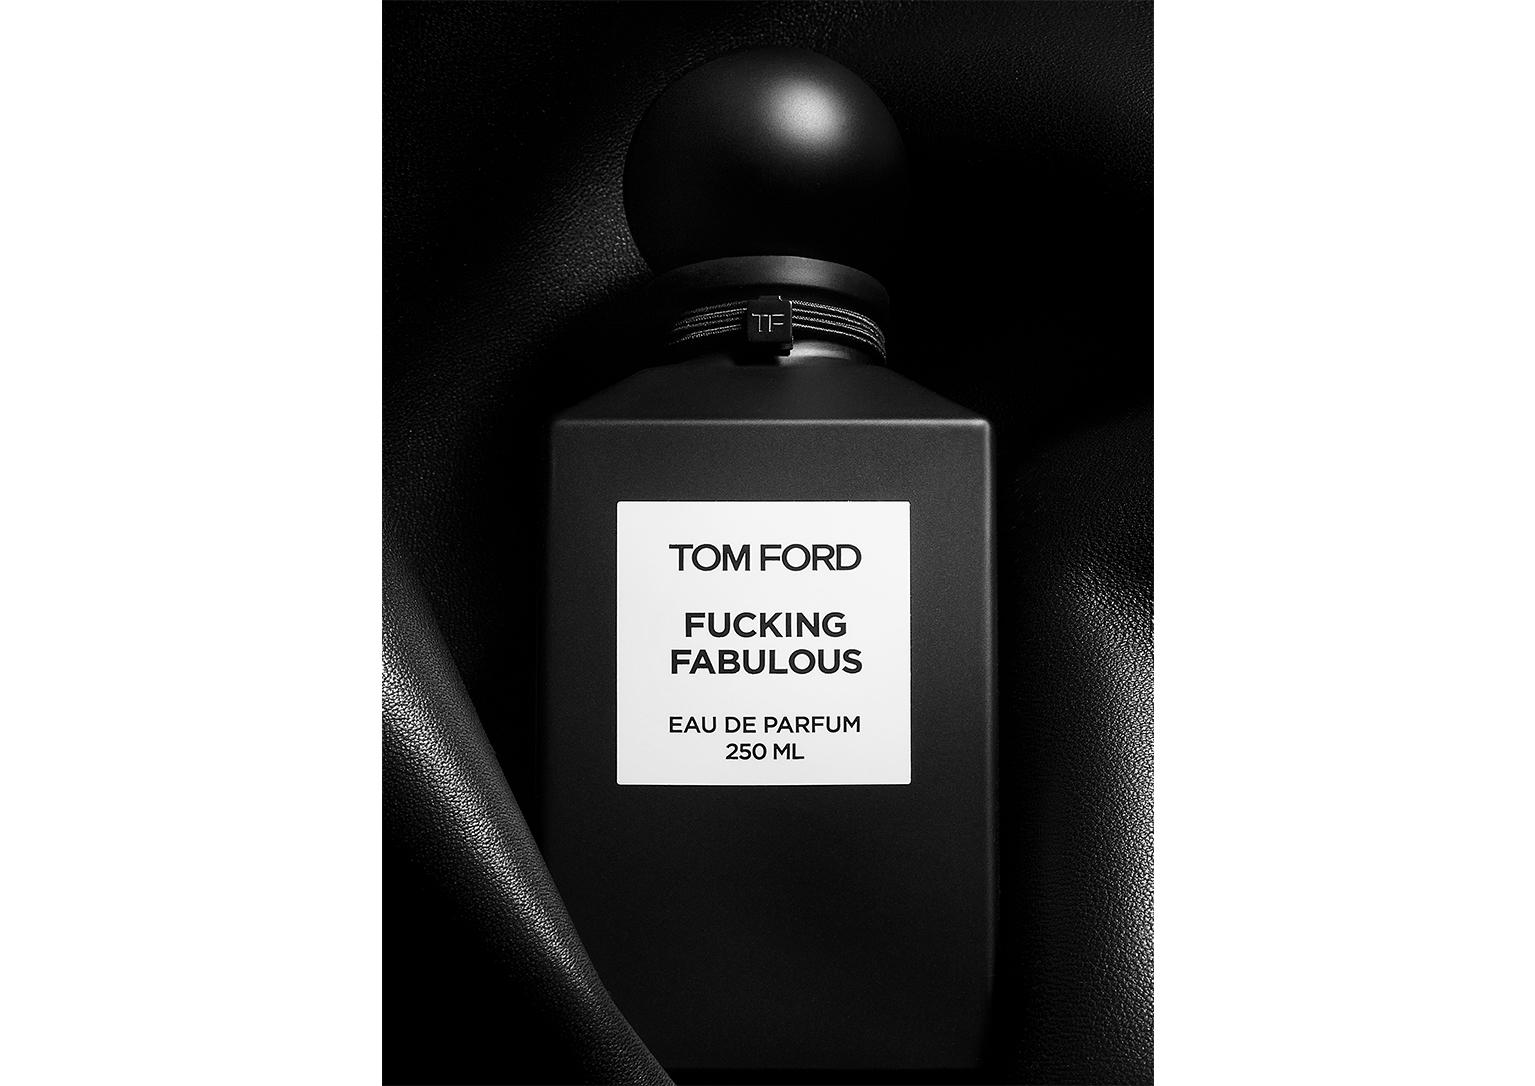 Tom Ford FUCKING FABULOUS EAU DE PARFUM - Beauty 